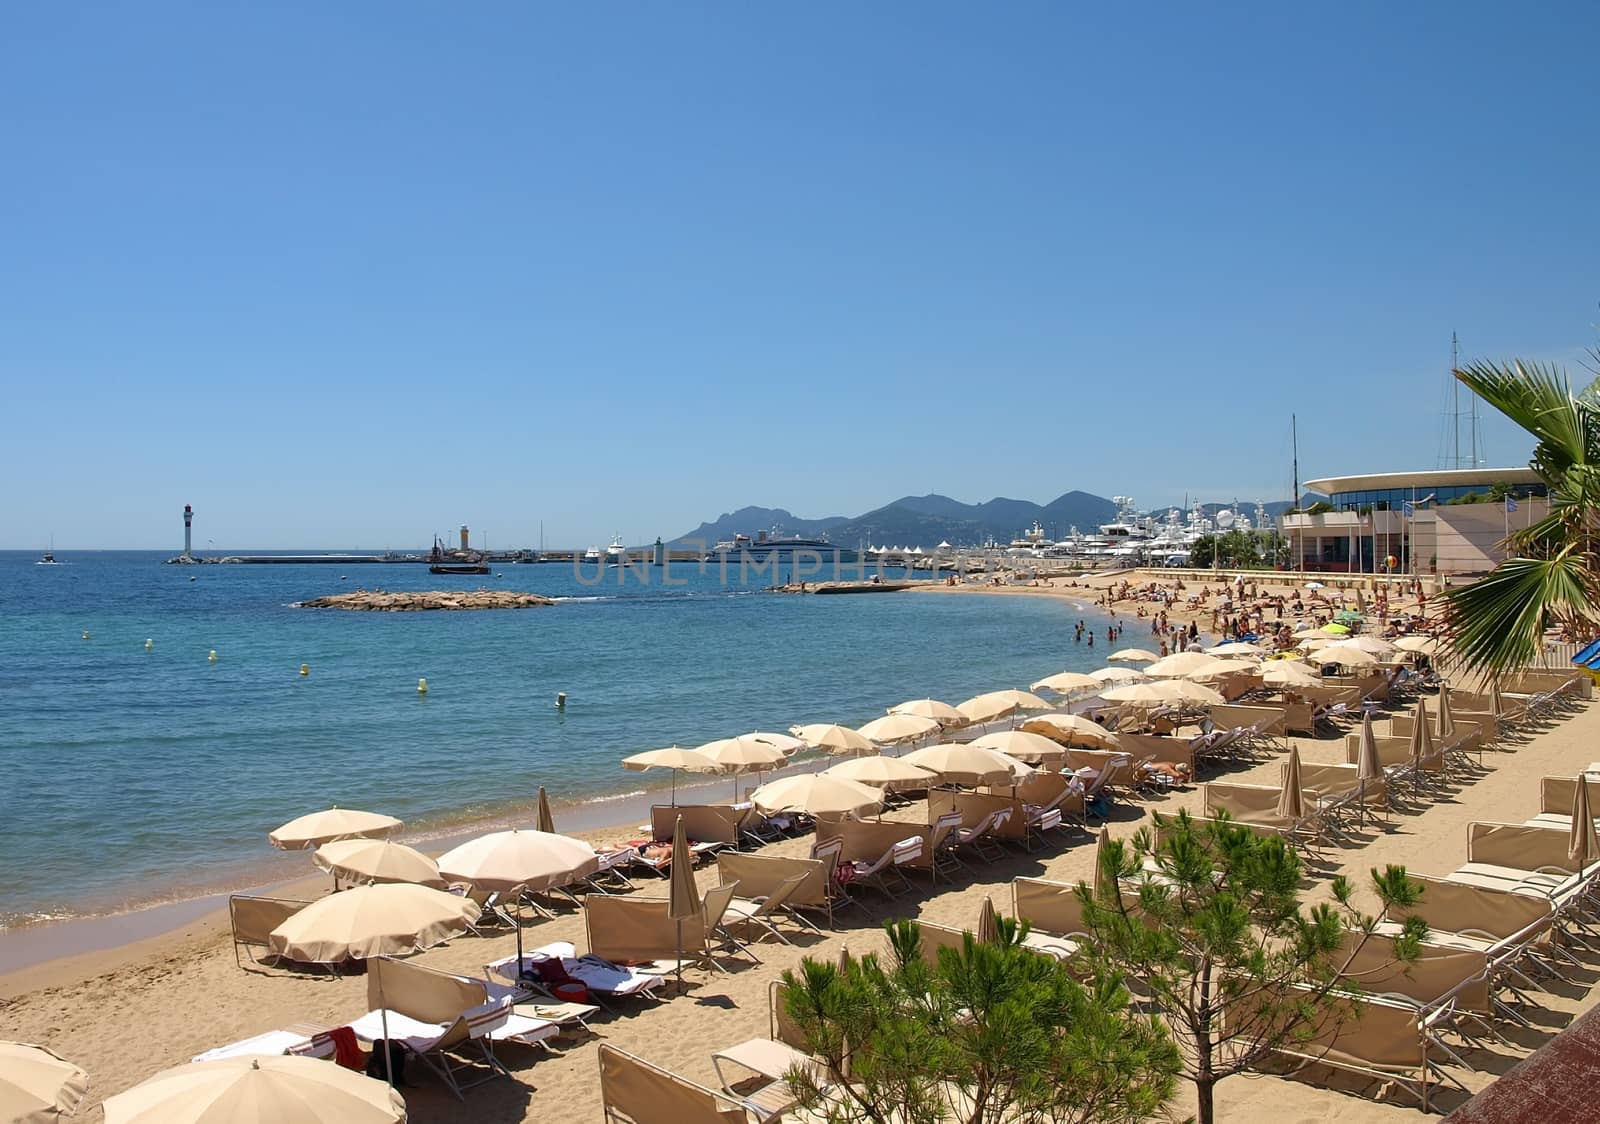 View of Croissette Beach at Cannes alpes maritime provence cote d'azur south of France.